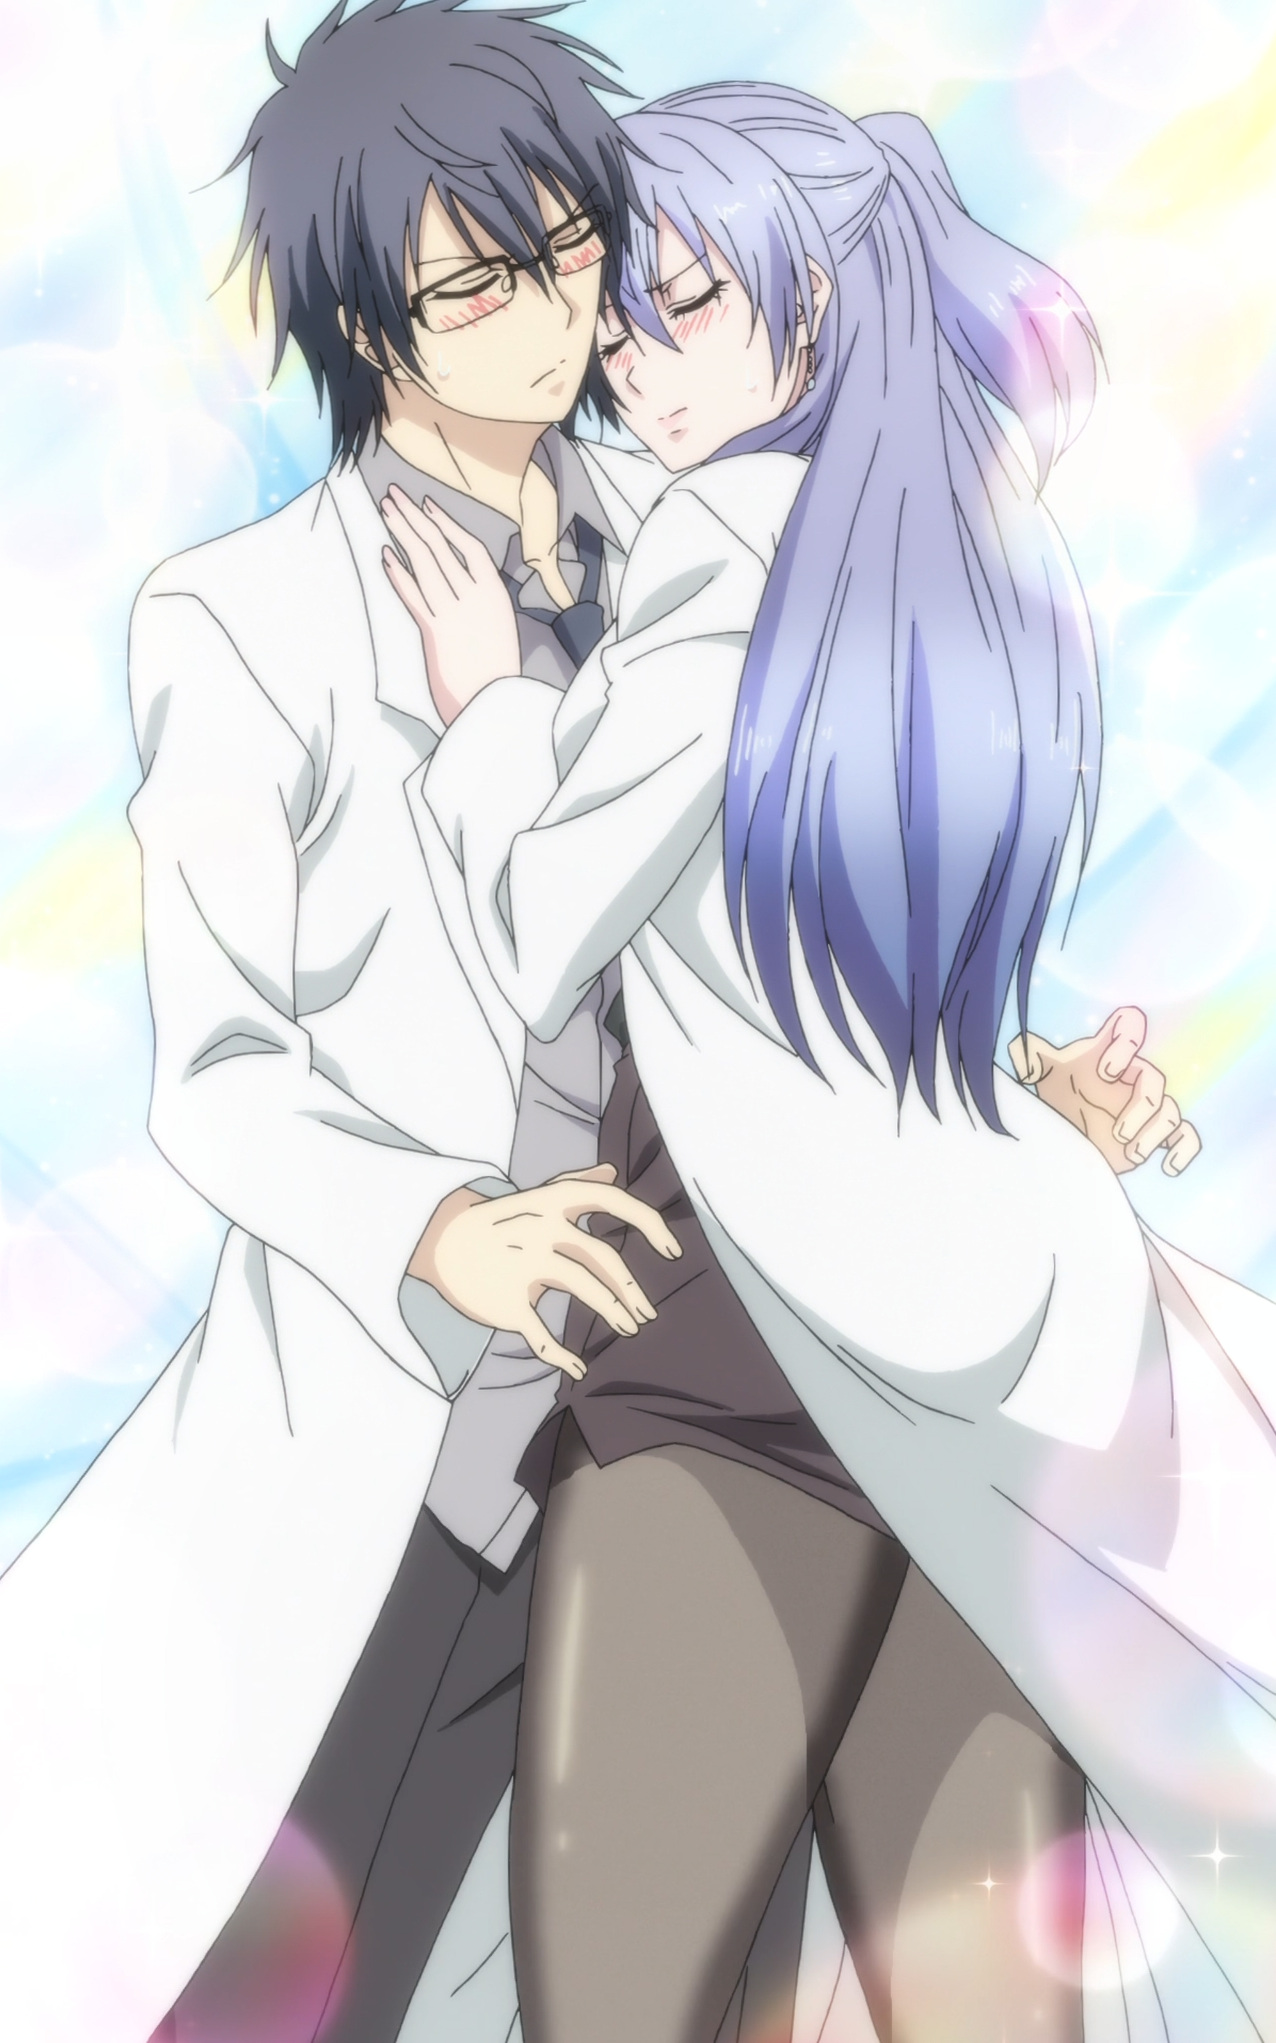 MyAnimeList on X: Rikei ga Koi ni Ochita no de Shoumei shitemita. (Science  Fell in Love, So I Tried to Prove It) romantic comedy manga gets TV anime  adaptation  #リケ恋  /